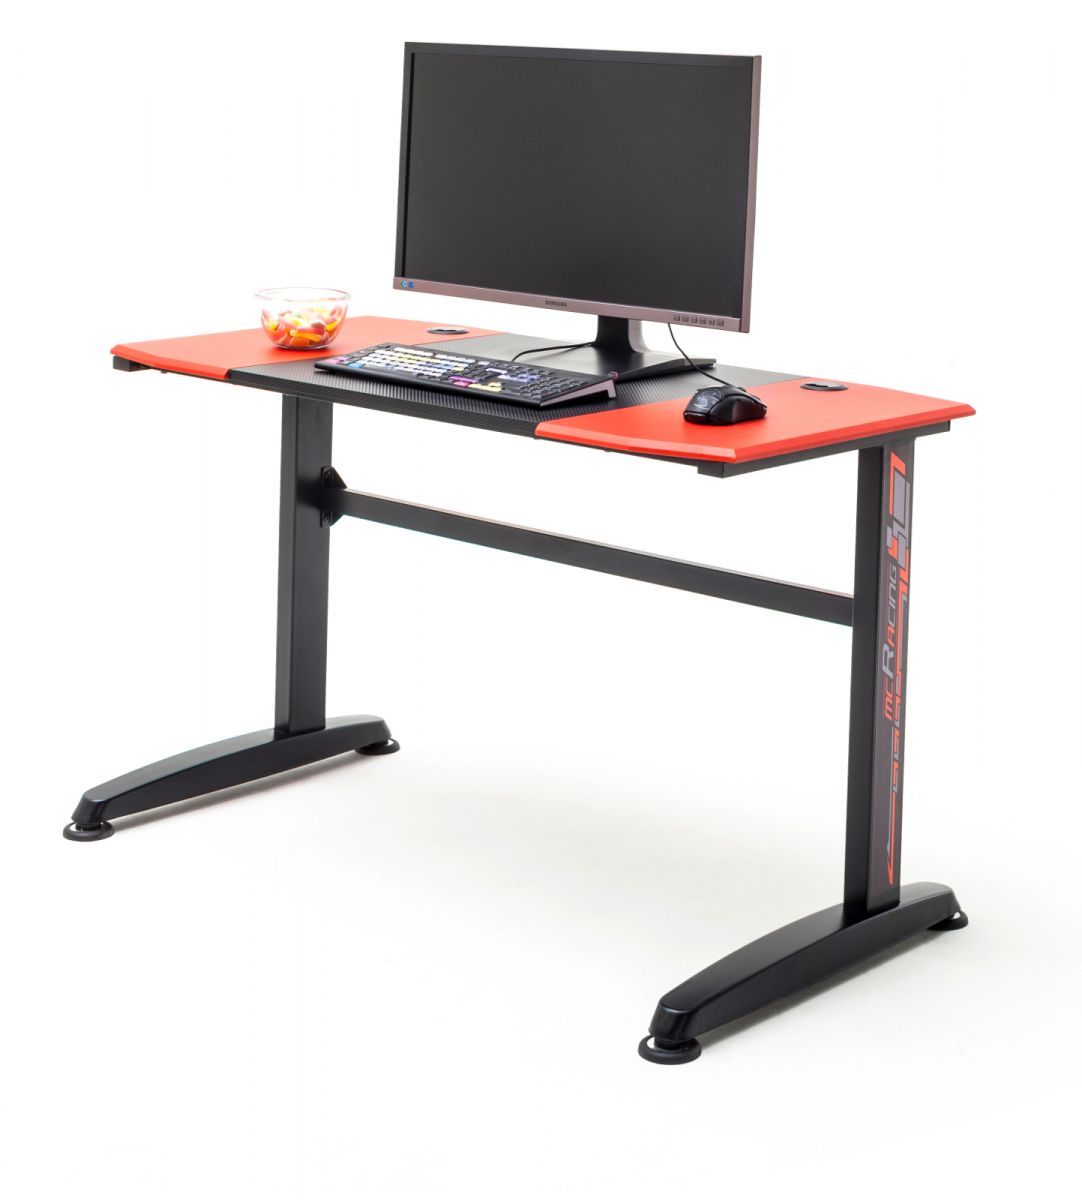 Gamingtisch mcRacing in schwarz und rot Computertisch 120 x 60 cm Gaming Desk